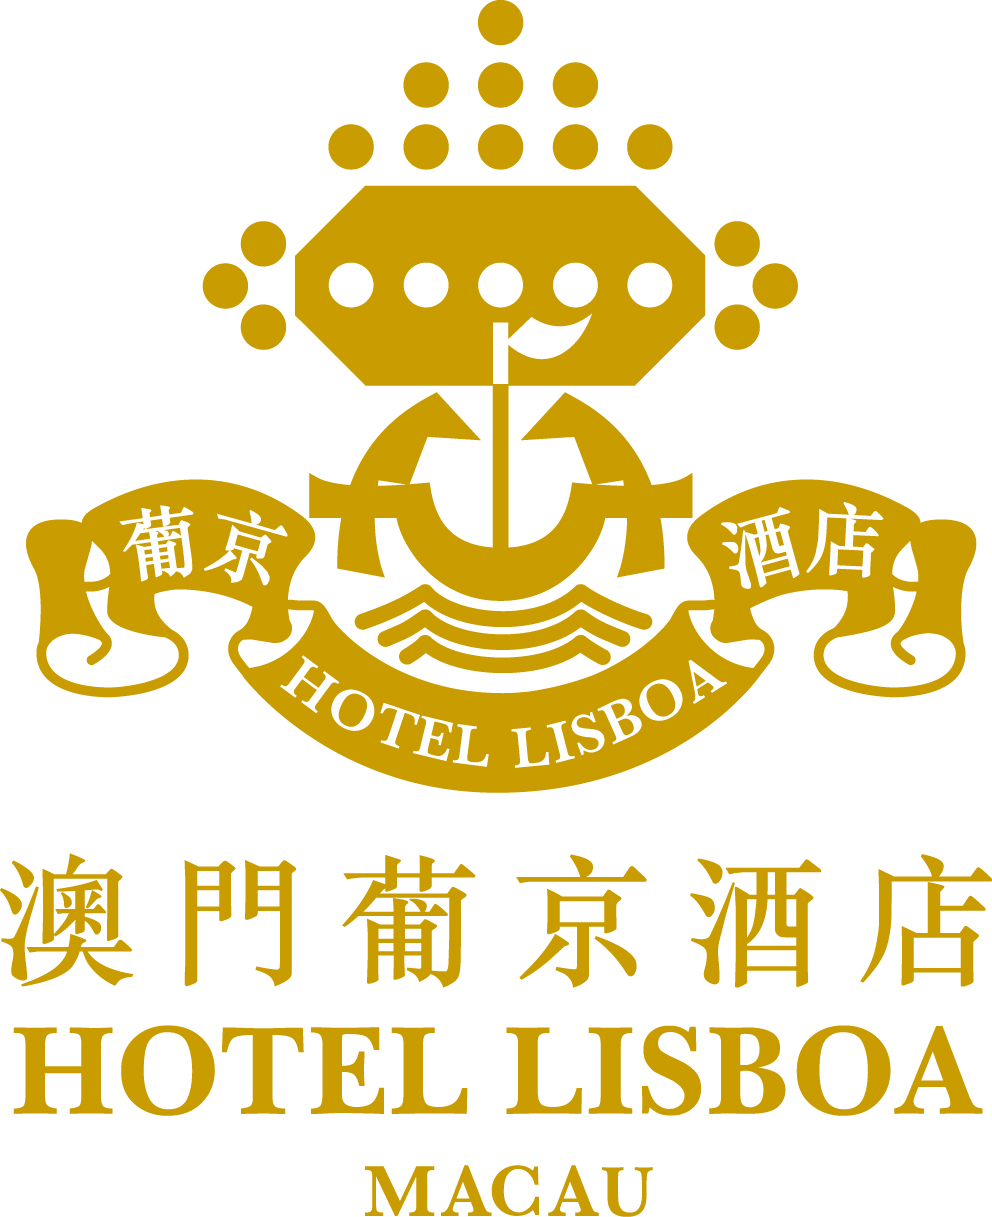 Hotel Lisboa Macau